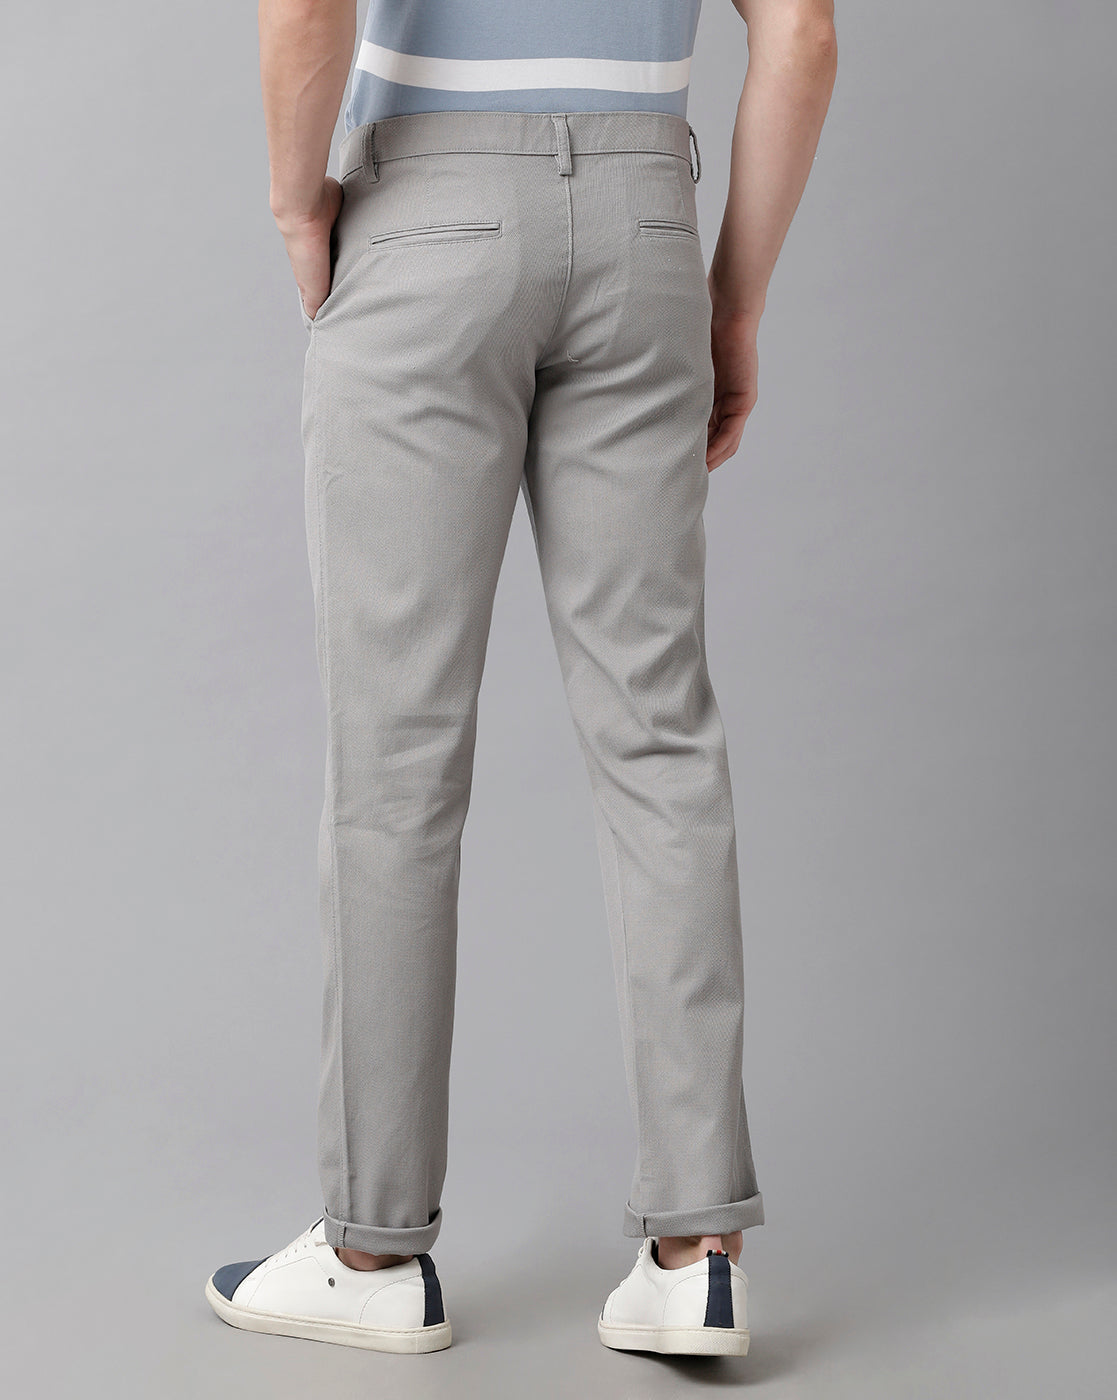 Buy y2z Wholesale Men Slim Fit Trouser  Men Formal  Casual Trousers